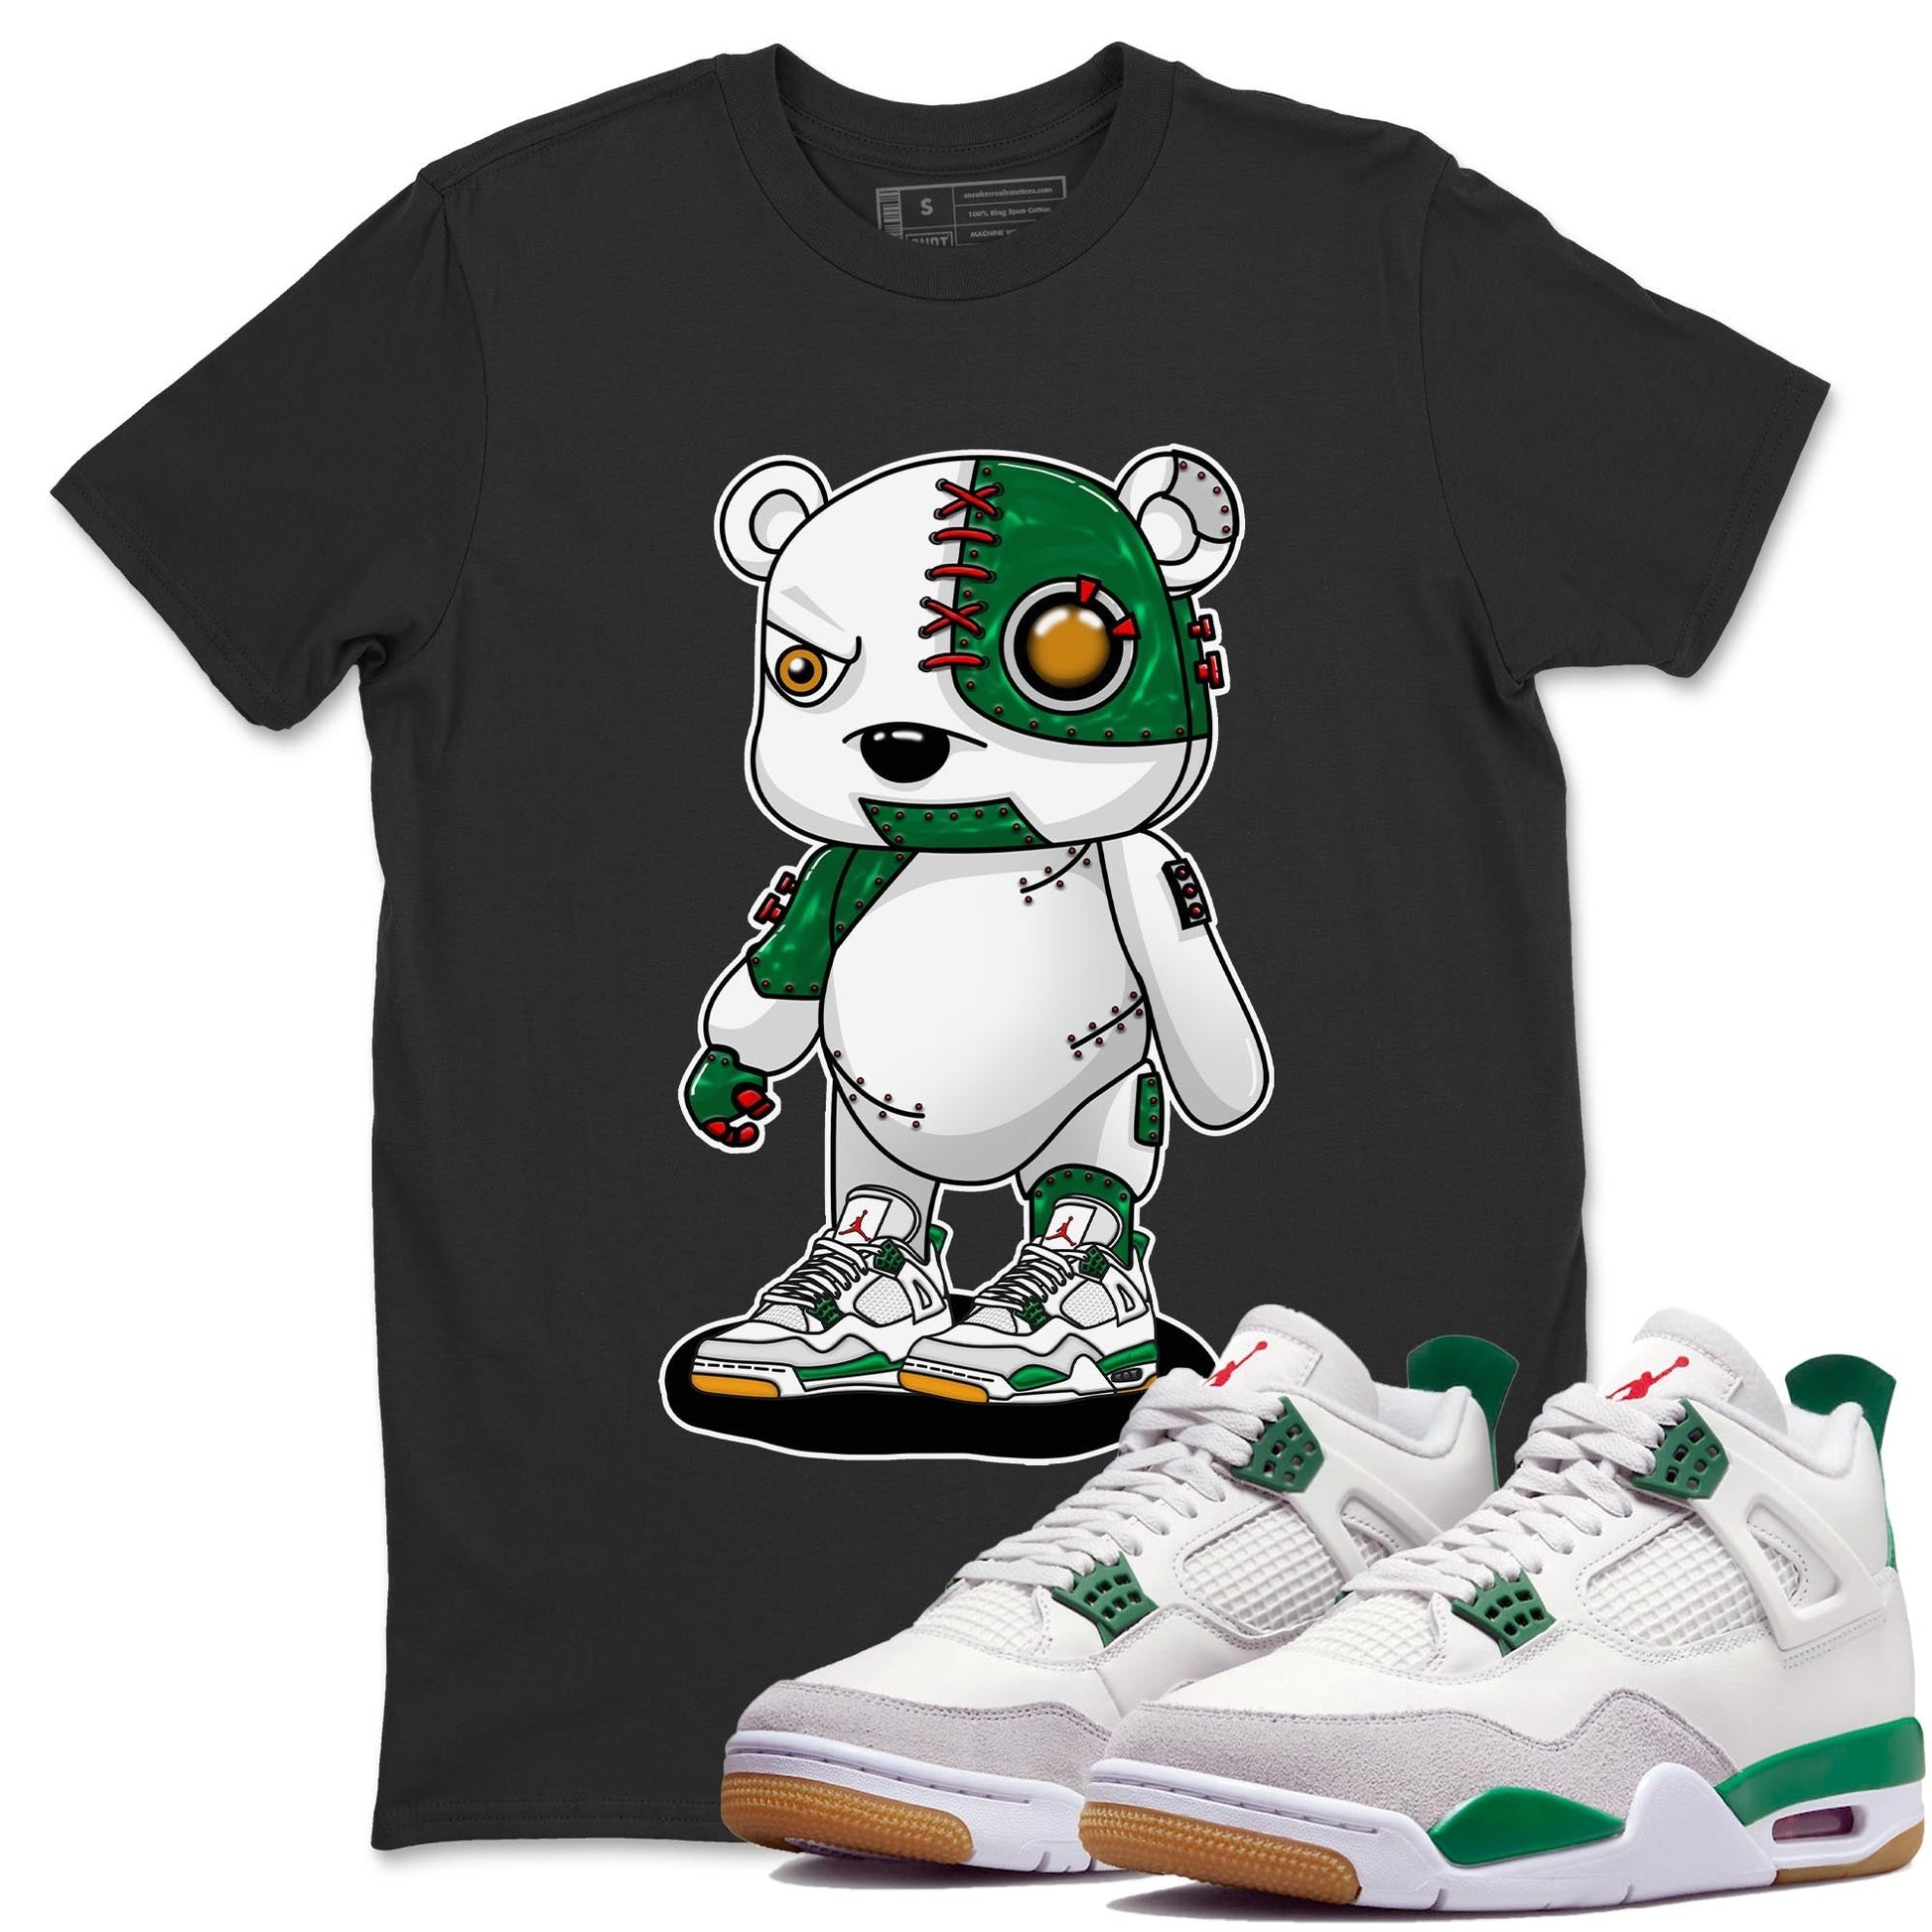 Jordan 4 Pine Green SB Sneaker Match Tees Cyborg Bear Sneaker Tees 4s Pine Green Nike SB Sneaker Tees Sneaker Release Shirts Unisex Shirts Black 1